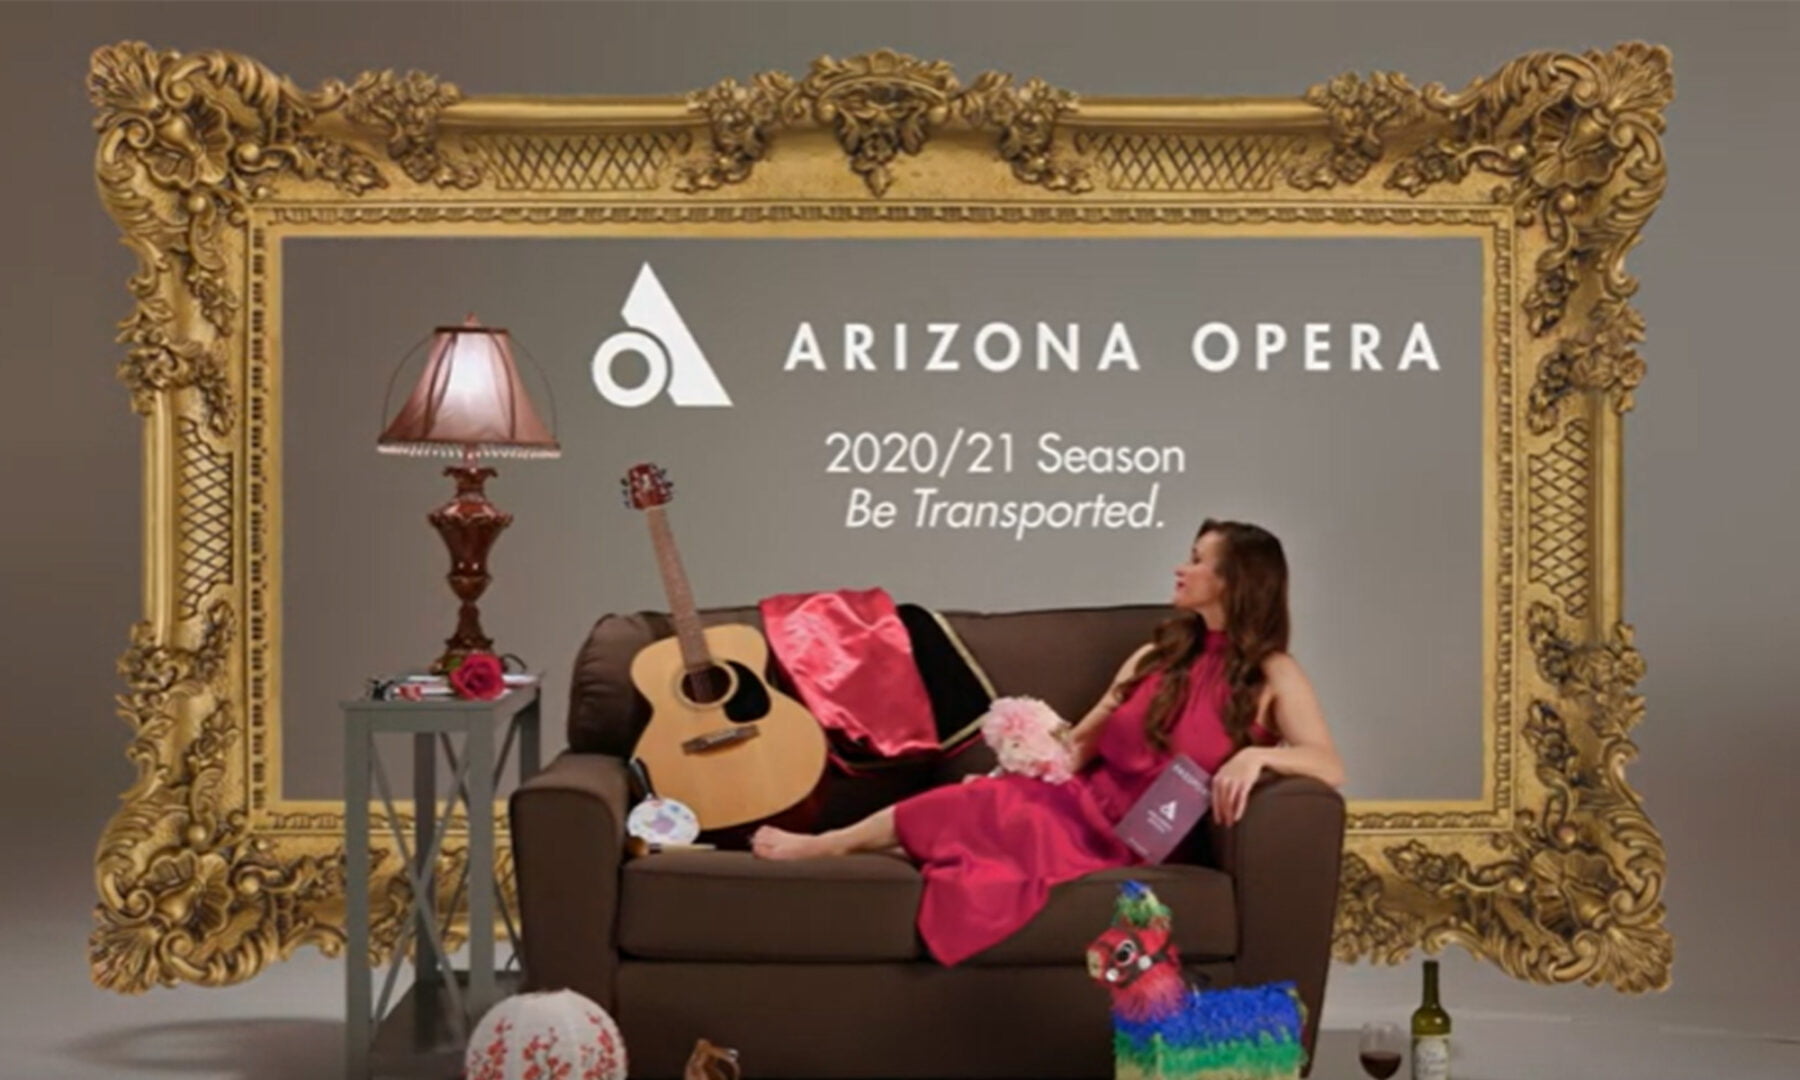 [VIDEO] Learn More About Arizona Opera’s 2020/21 Season!